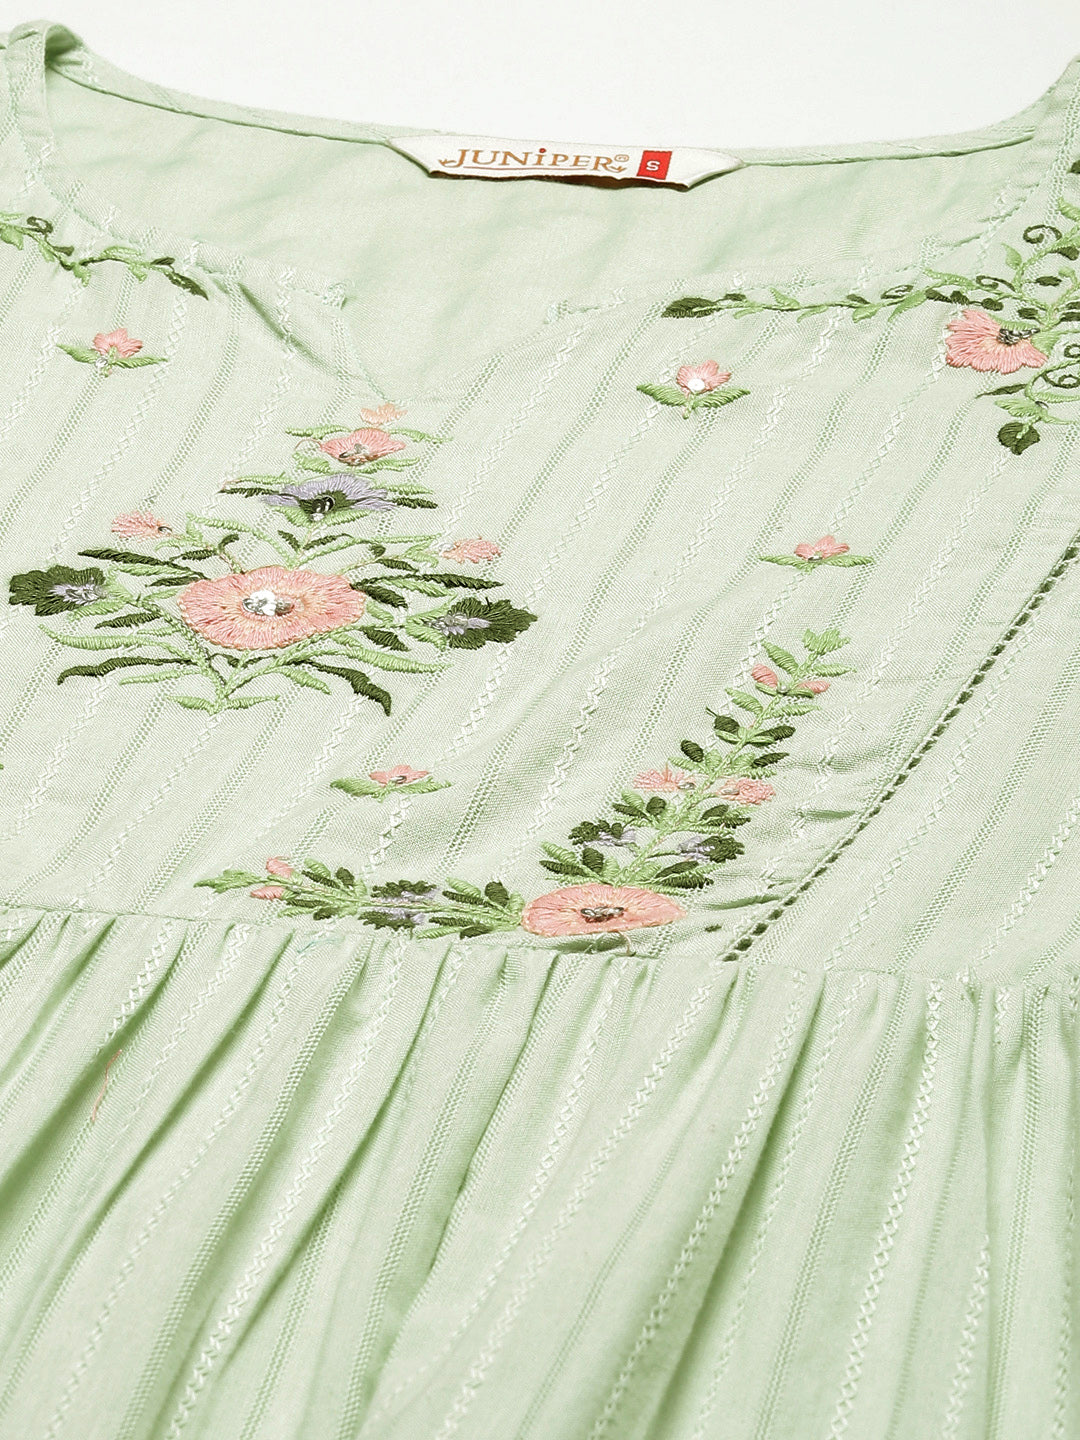 Women's  Sagegreen Cotton Dobby Embroidered Tiered Dress - Juniper